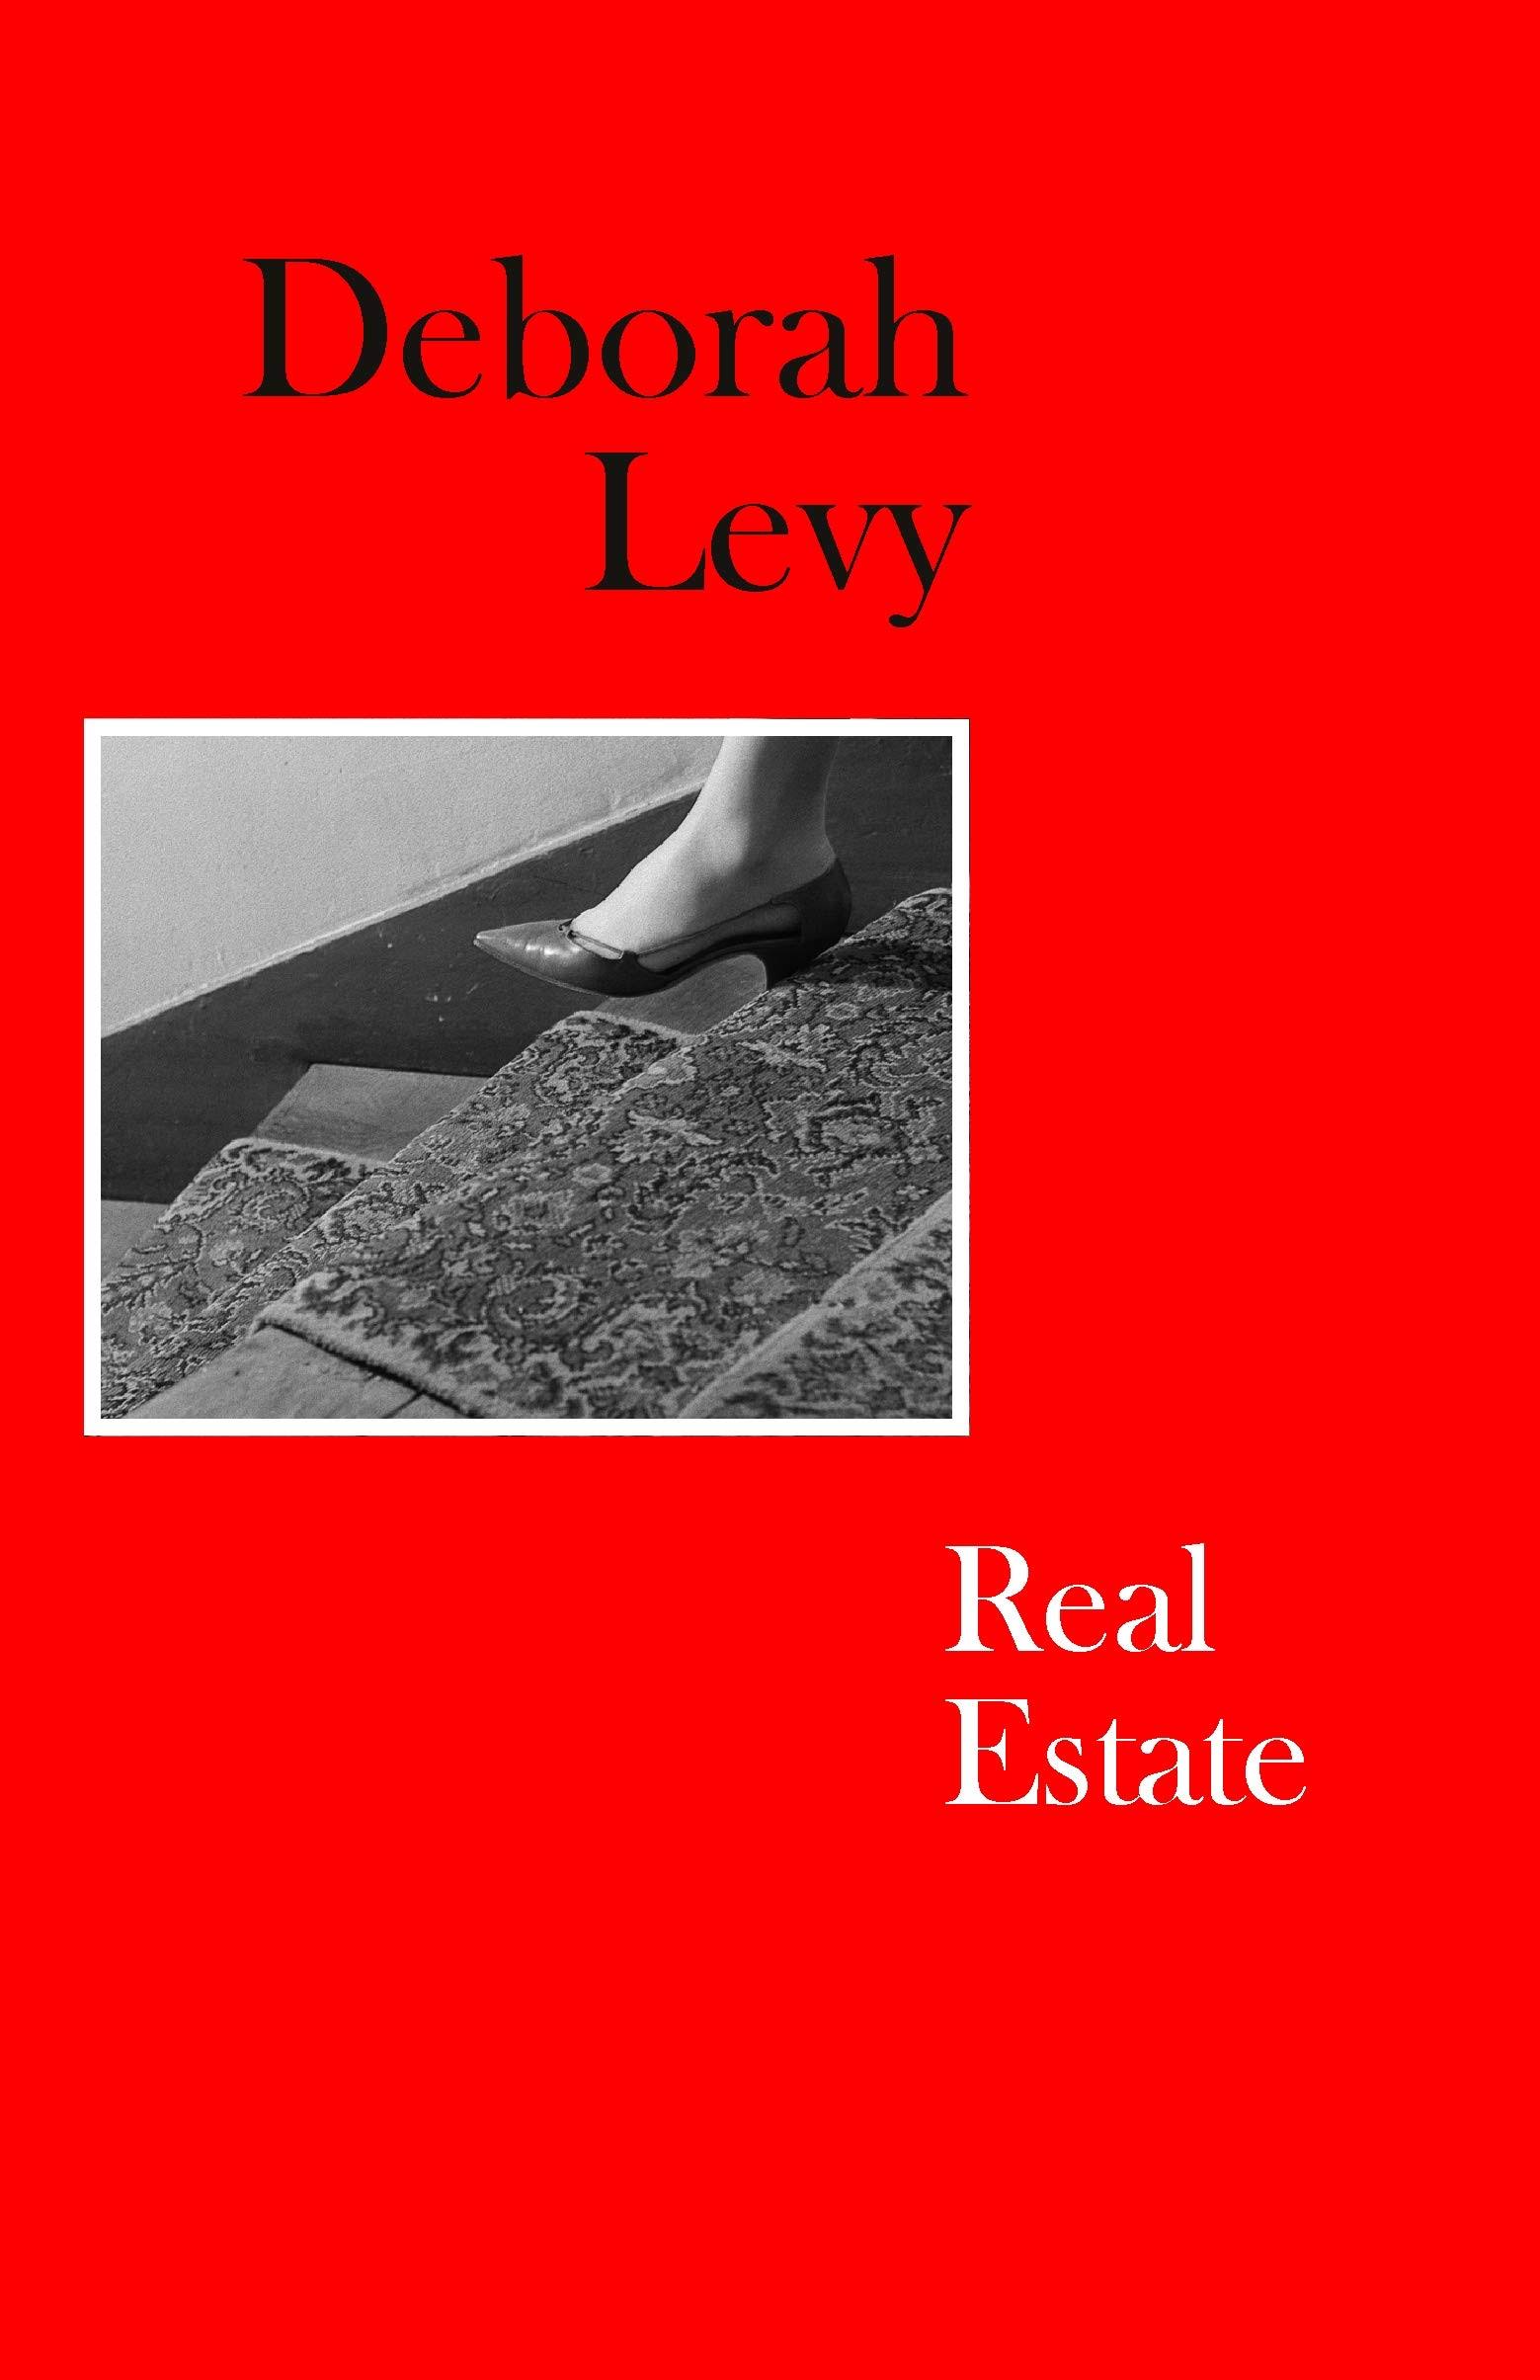 Real Estate [Book]